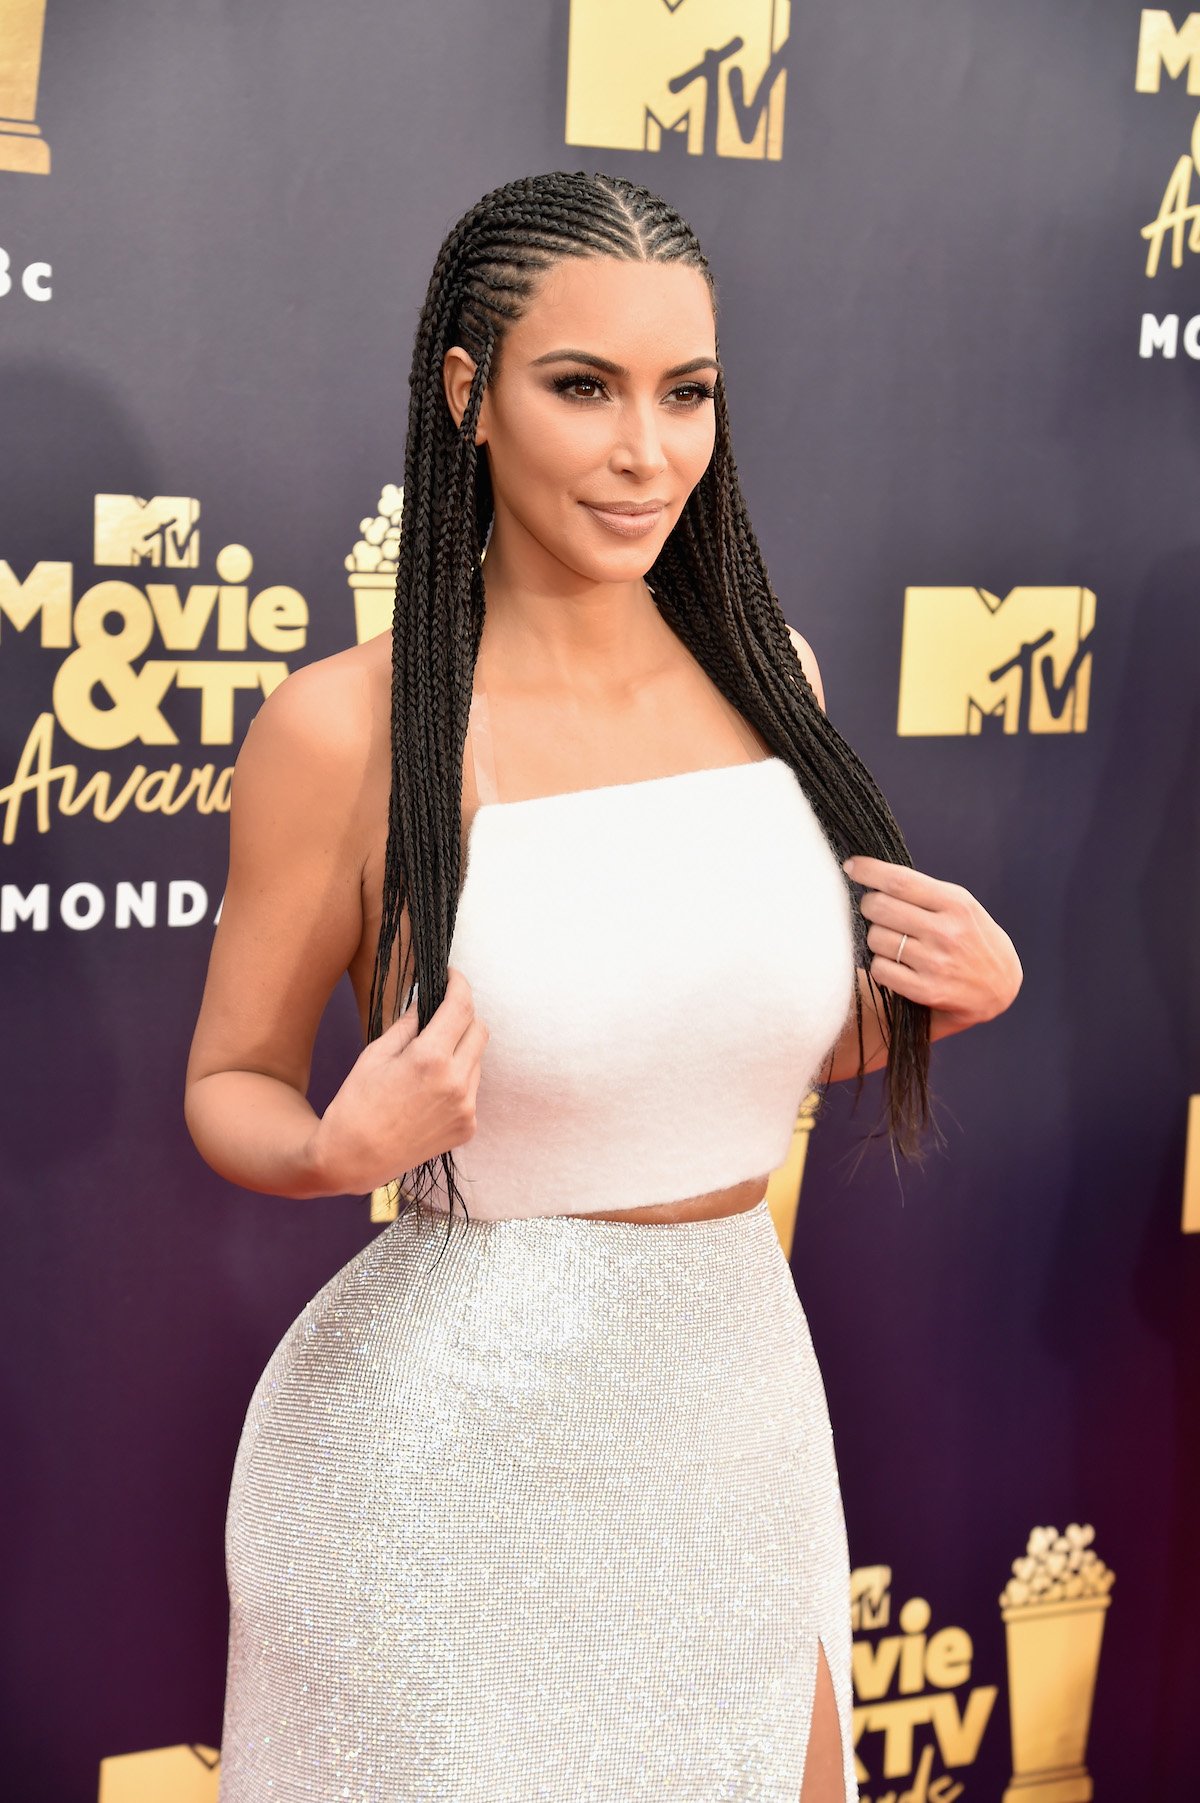 Kim Kardashian West wears long braids to an event.